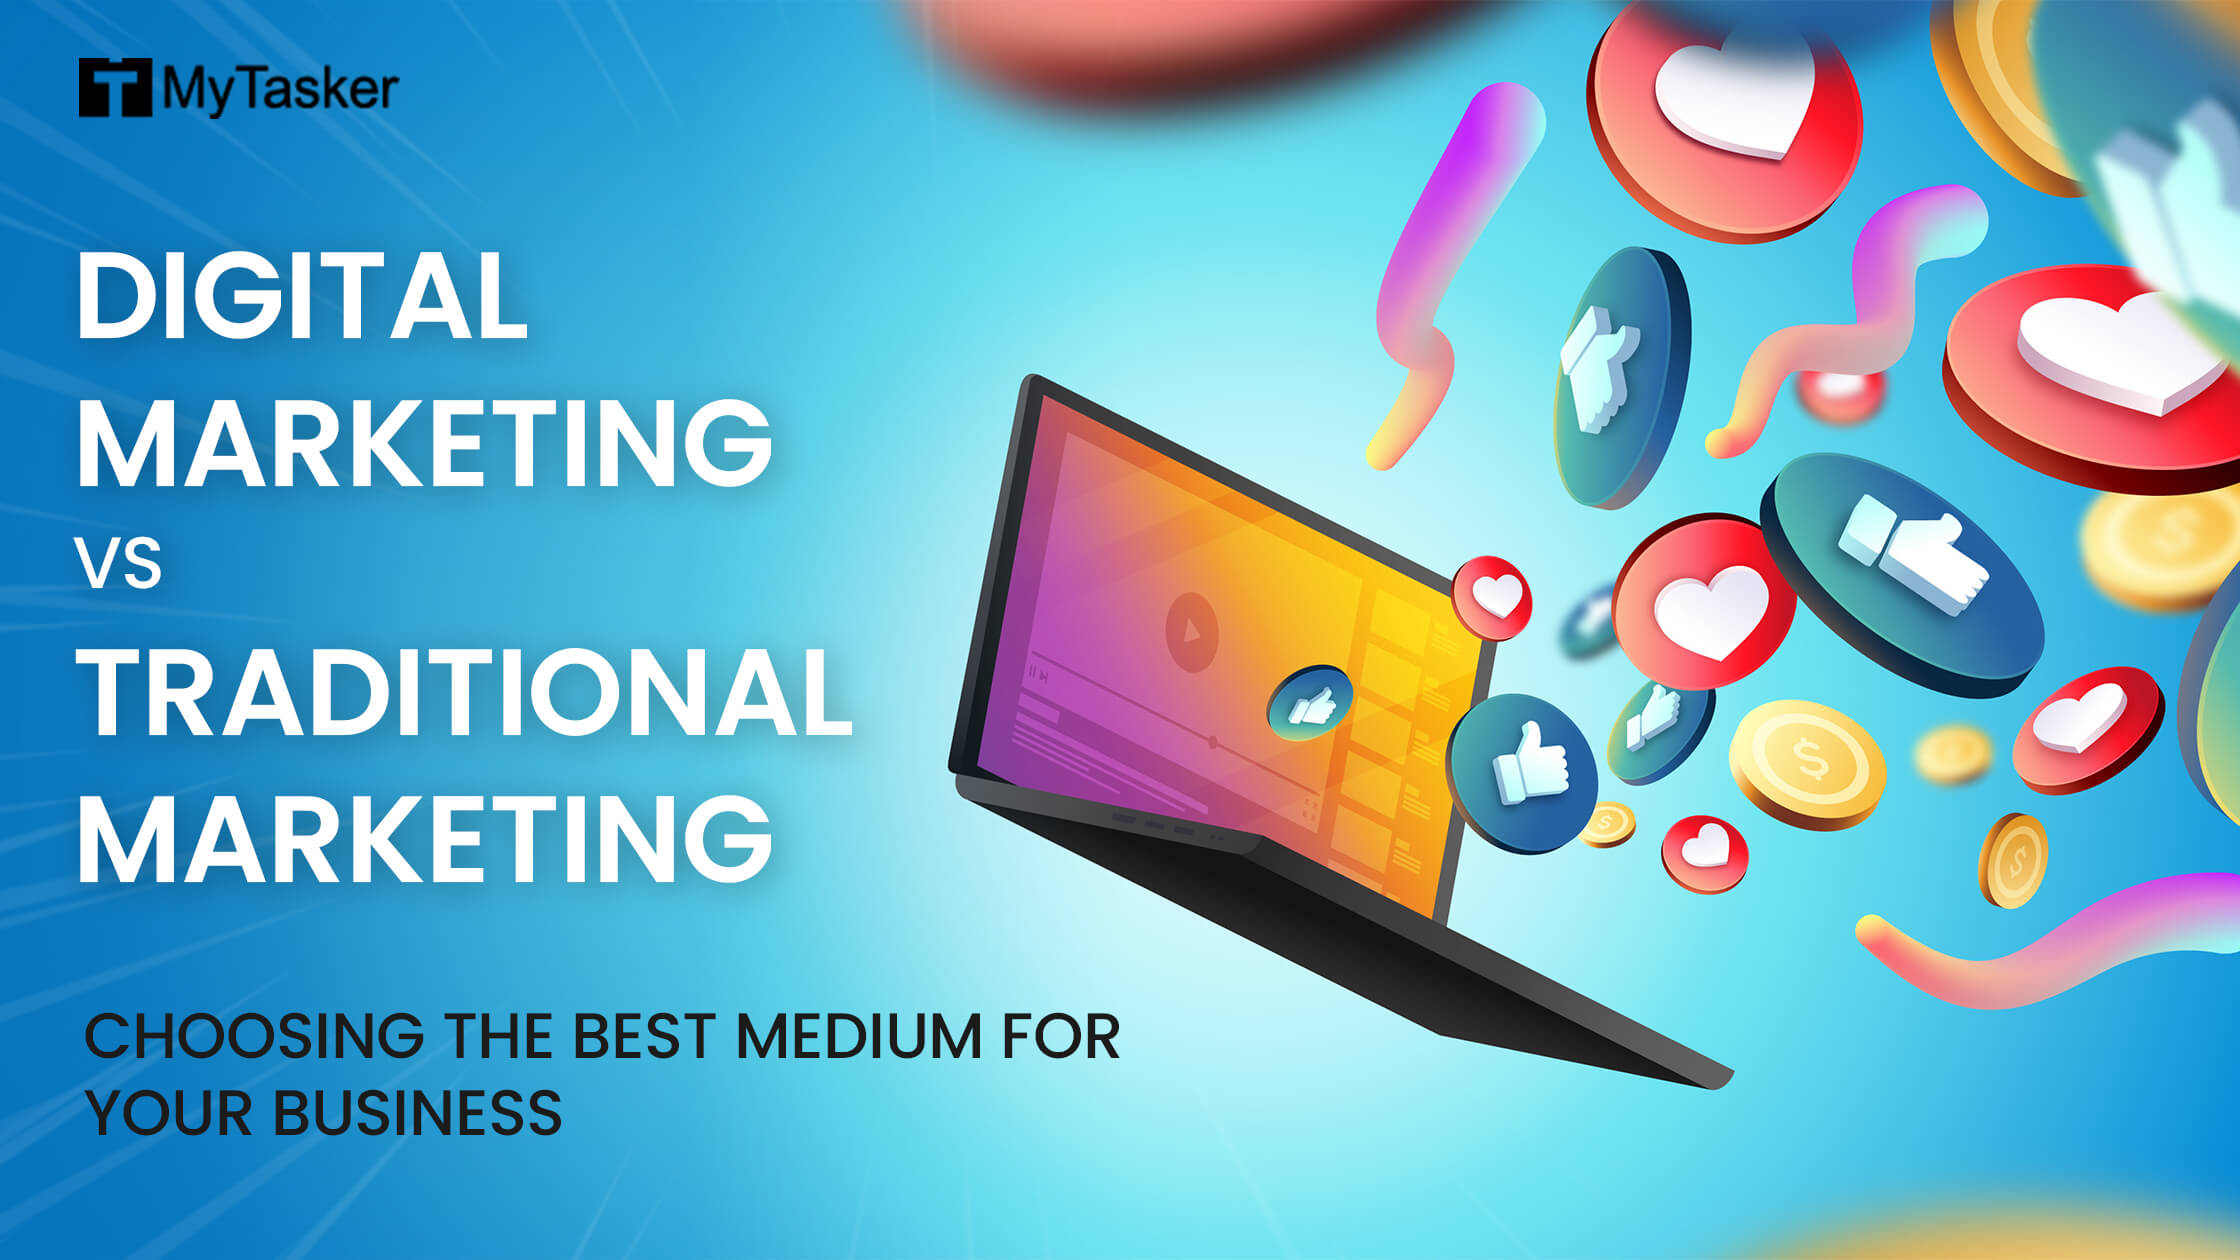 Digital Marketing Vs Traditional Marketing: Choosing the Best Medium for Your Business